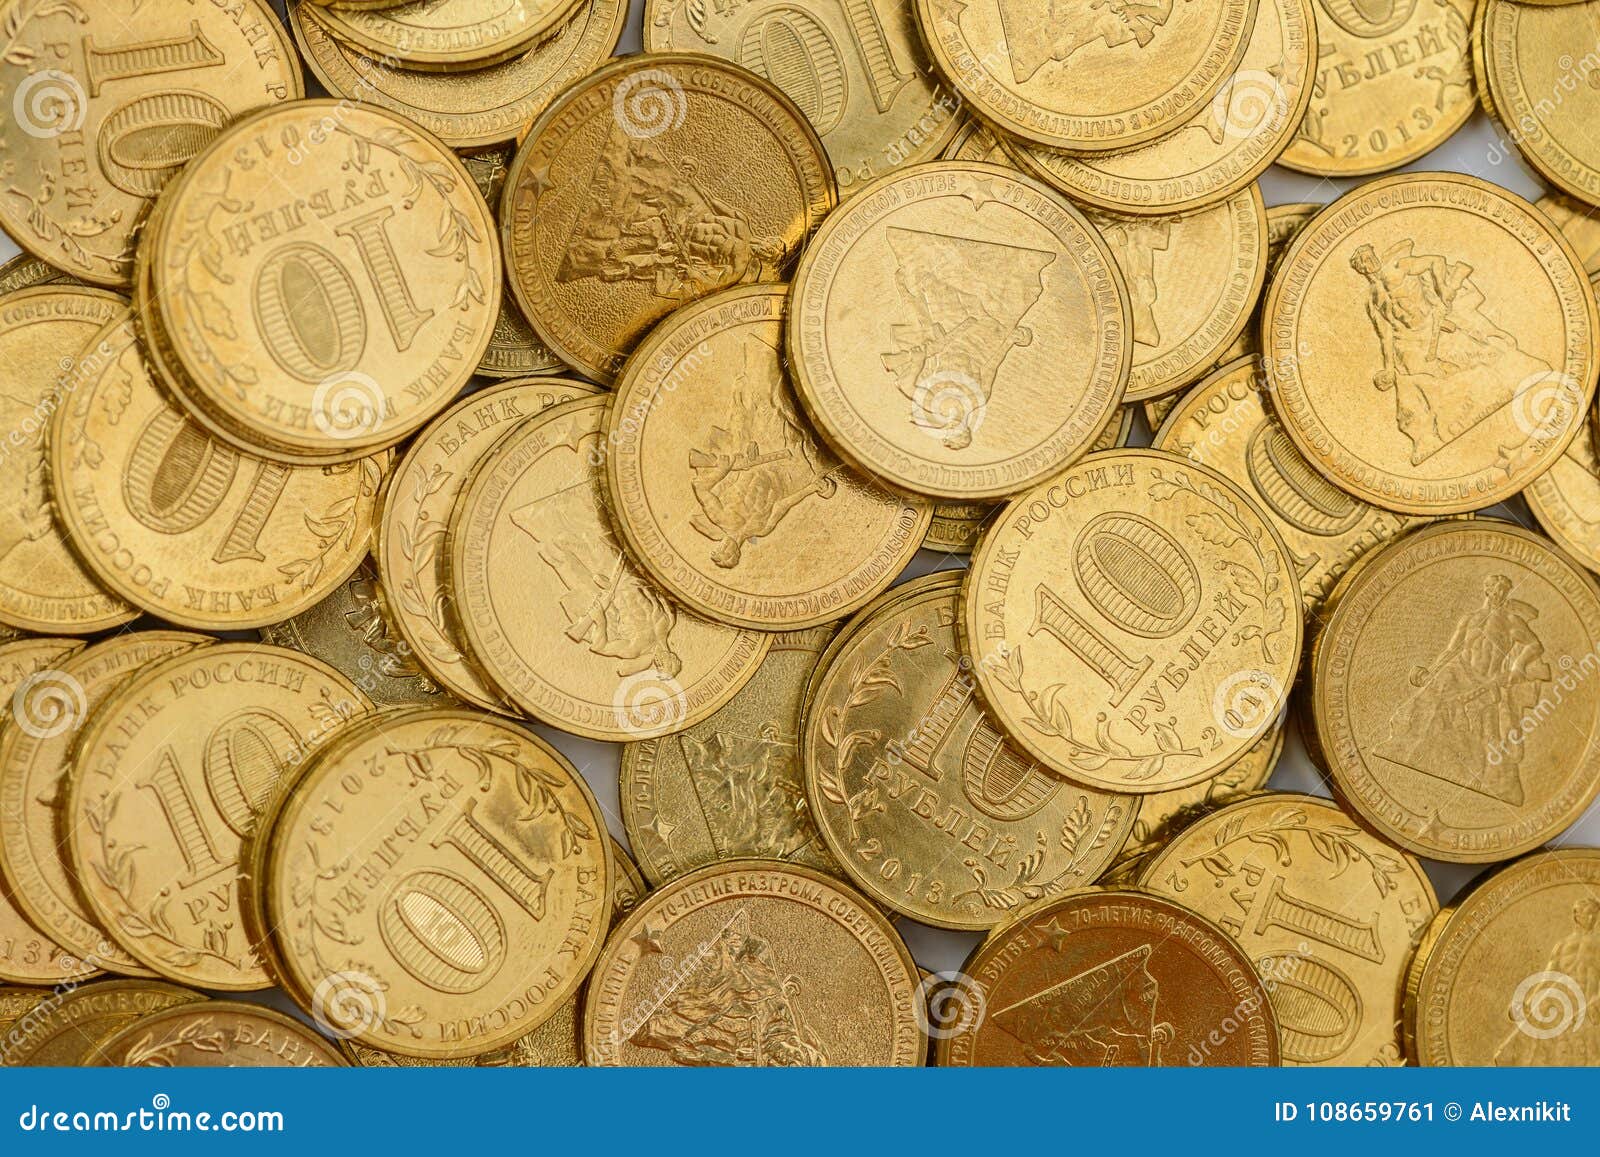 rare anniversary 10 ruble coins